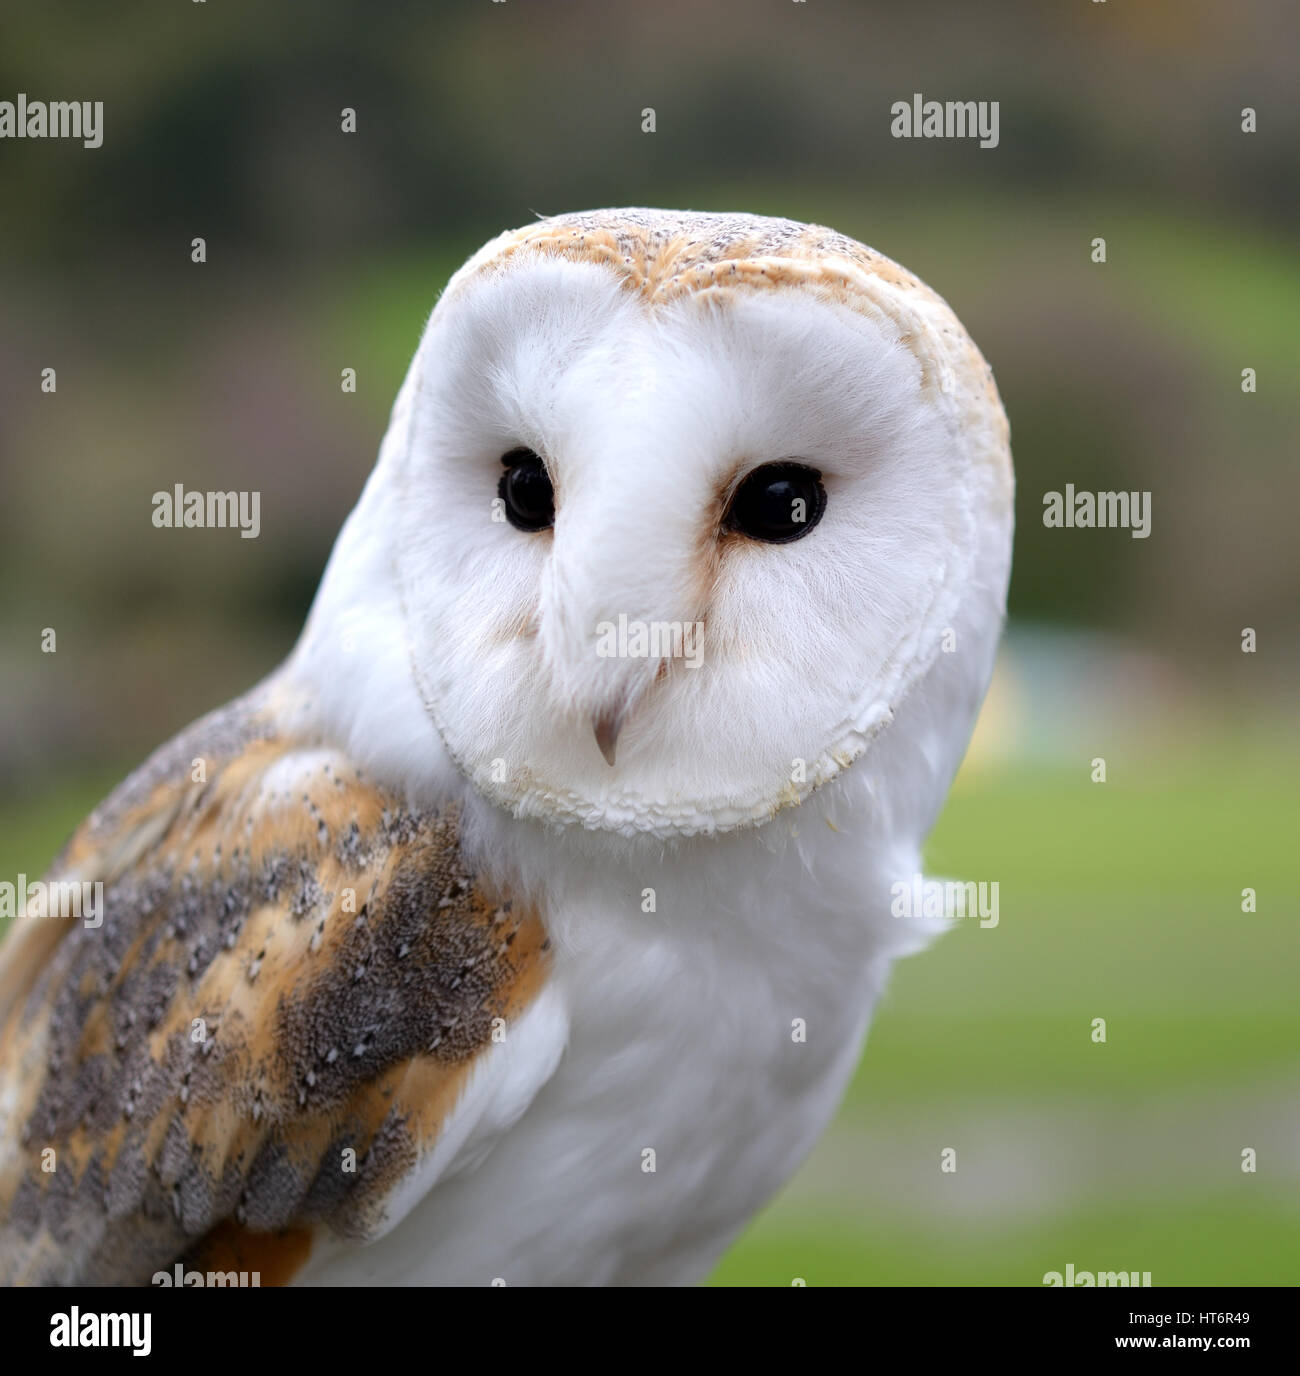 Barn owl face Stock Photo